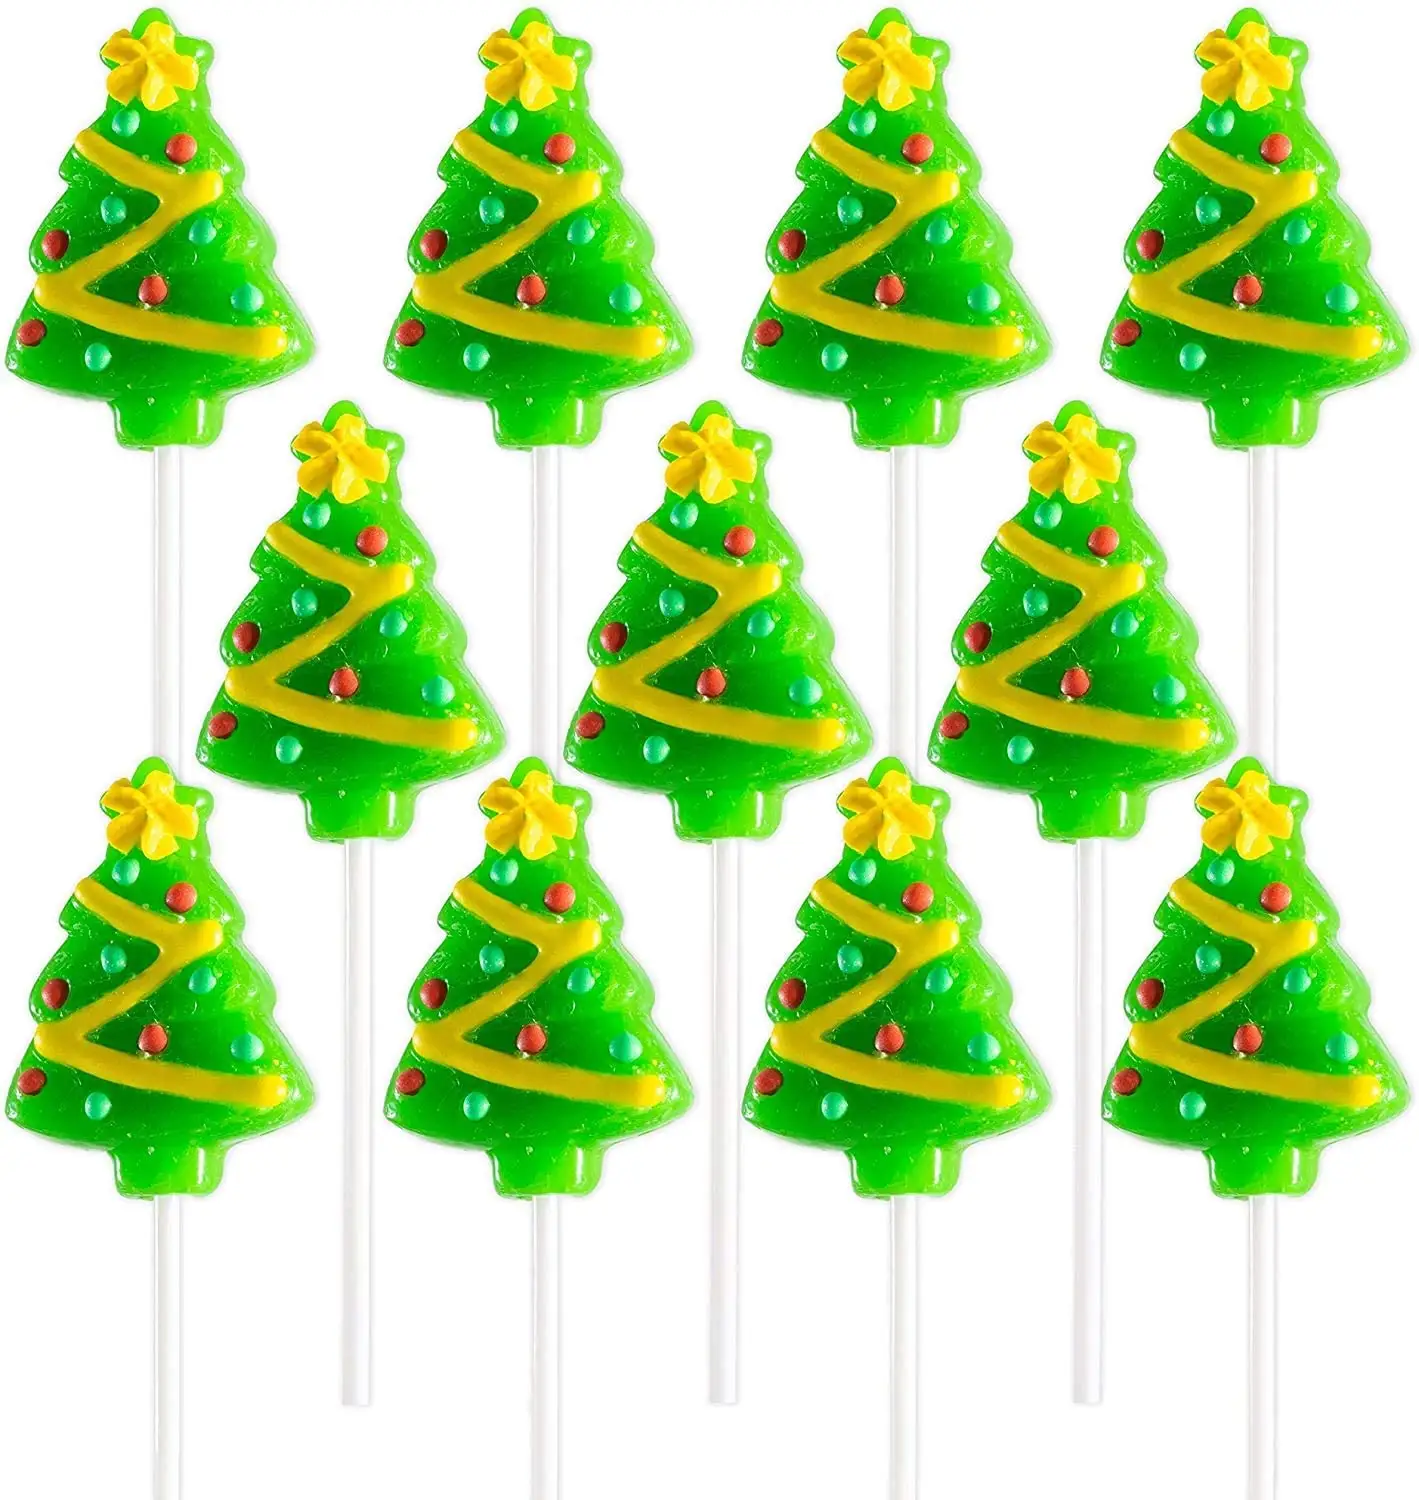 Green Christmas tree shape hard lollipop candy